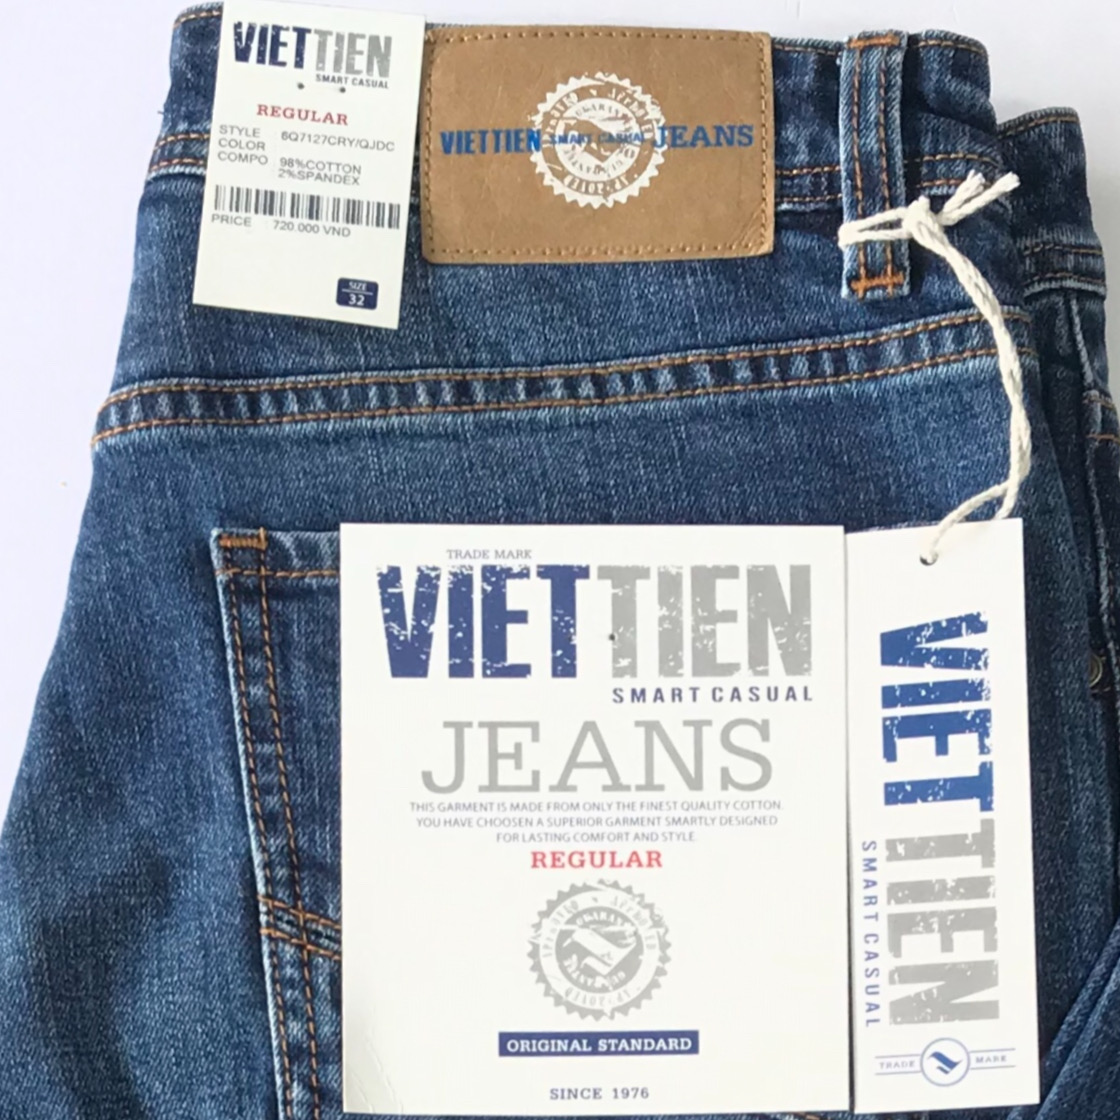 Viettien - Quần jeans nam smart casual 6Q7127-7123